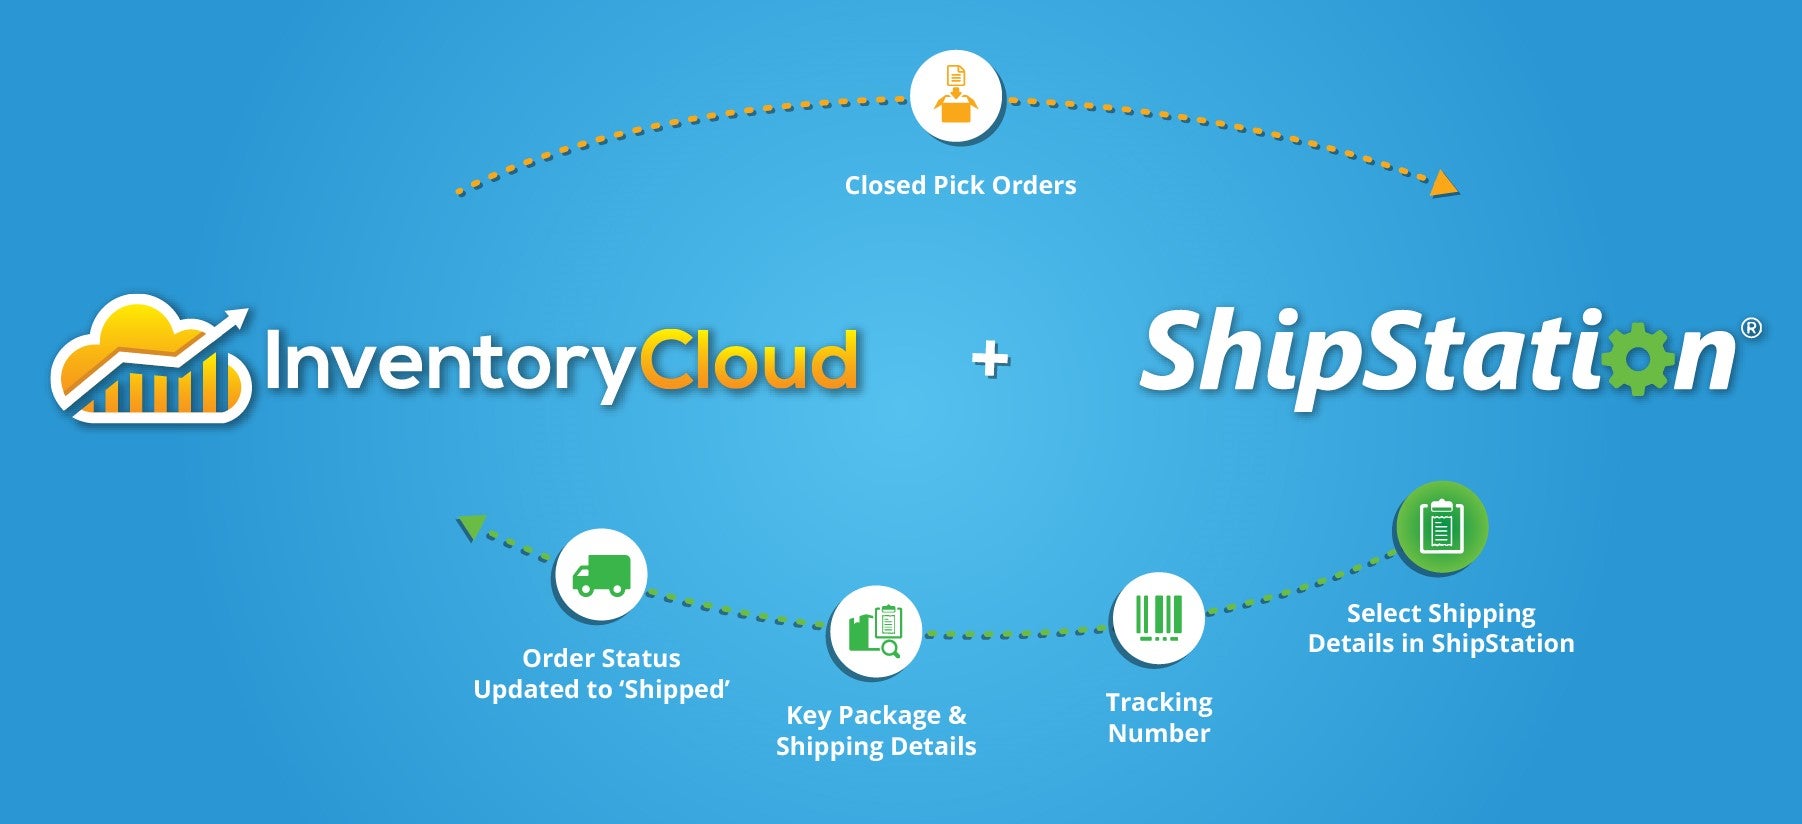 InventoryCloud + ShipStation